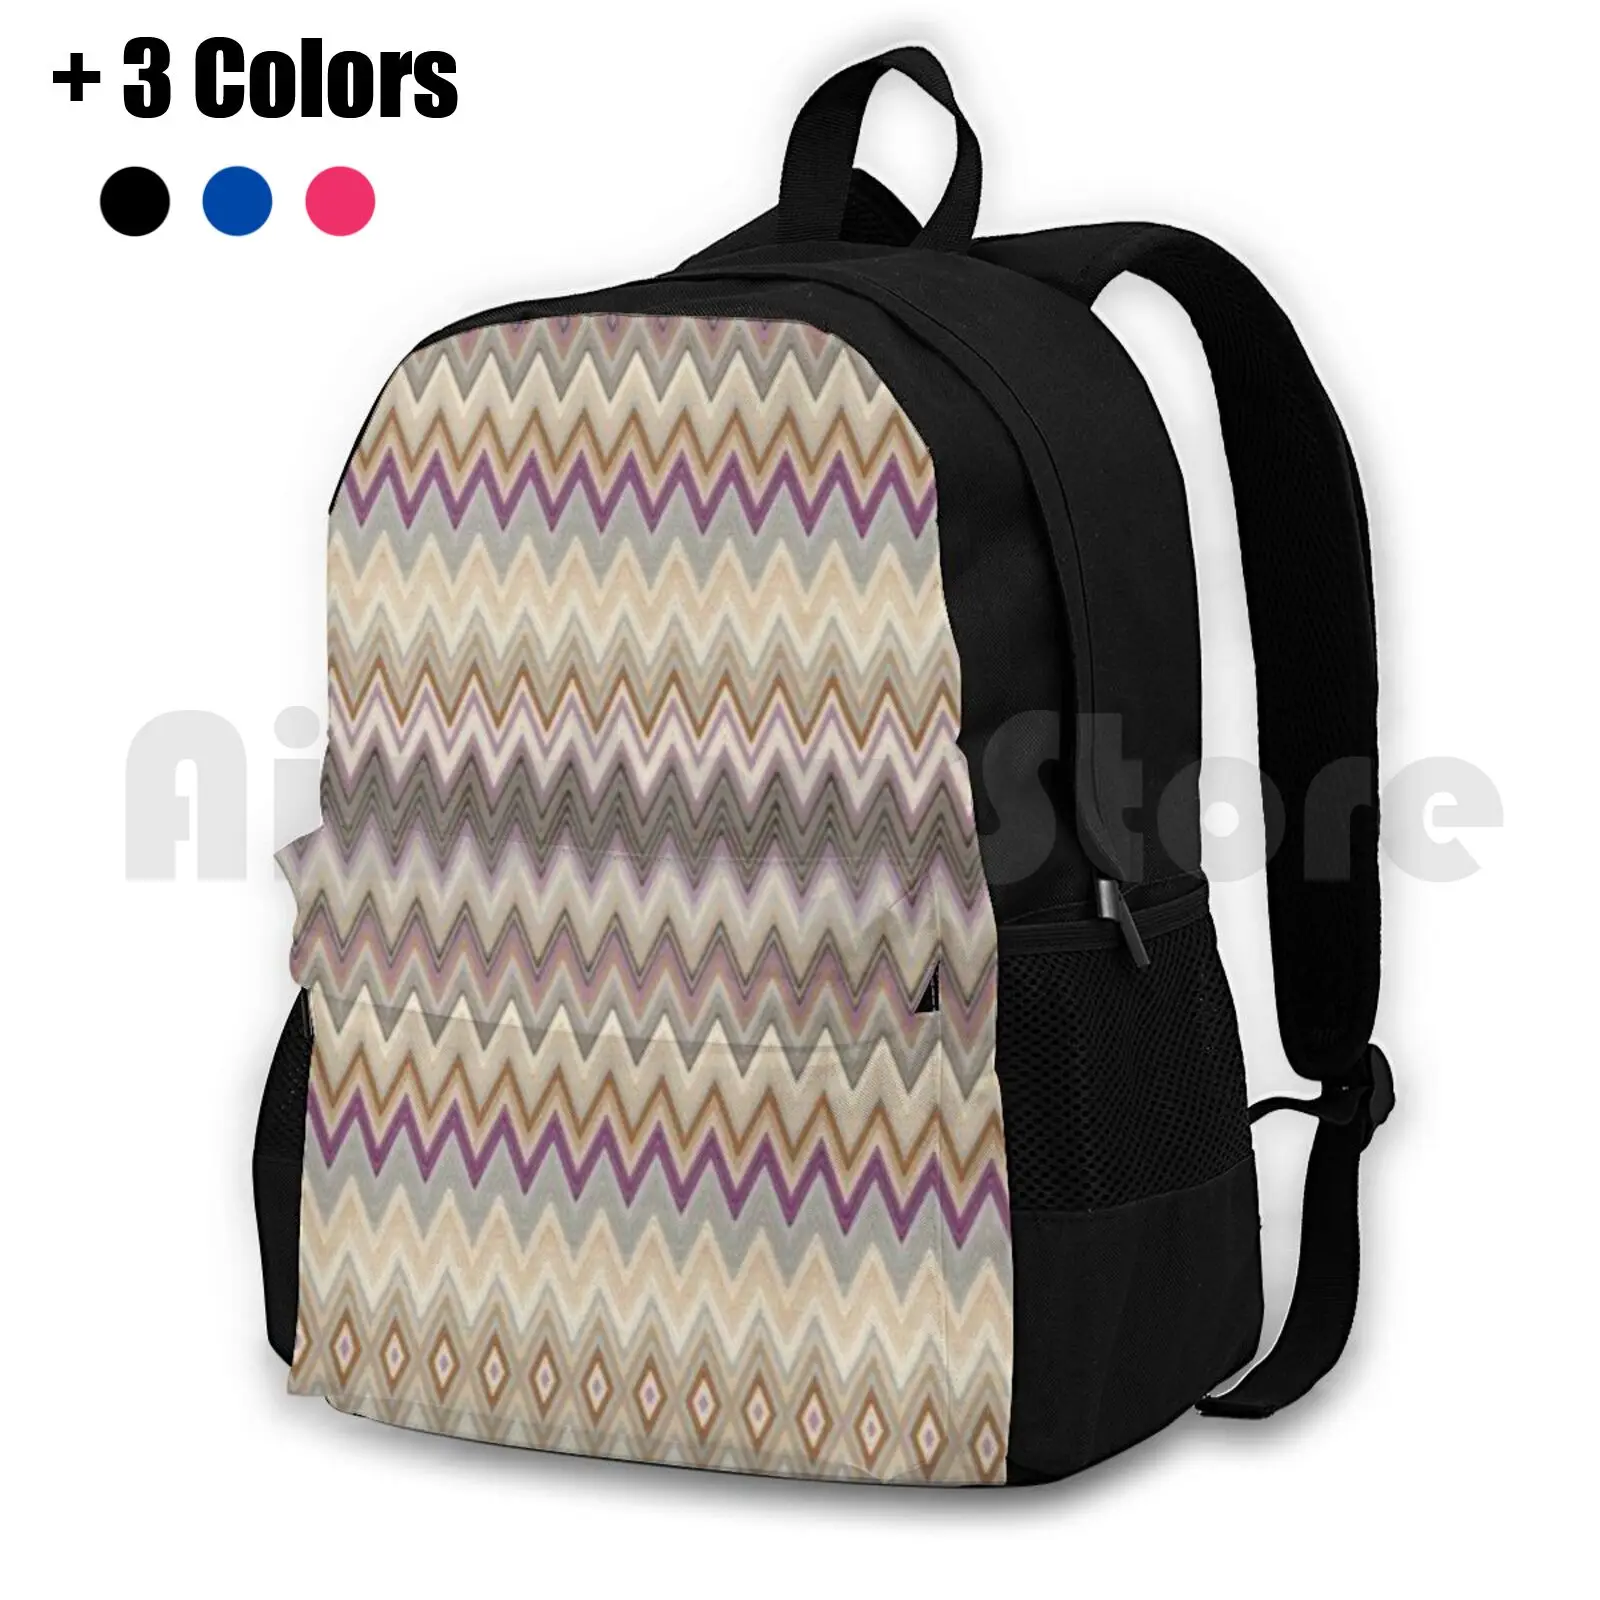 

New Design Outdoor Hiking Backpack Riding Climbing Sports Bag Fashion Geometric Boho Chic Color Contemporary Home Influencer